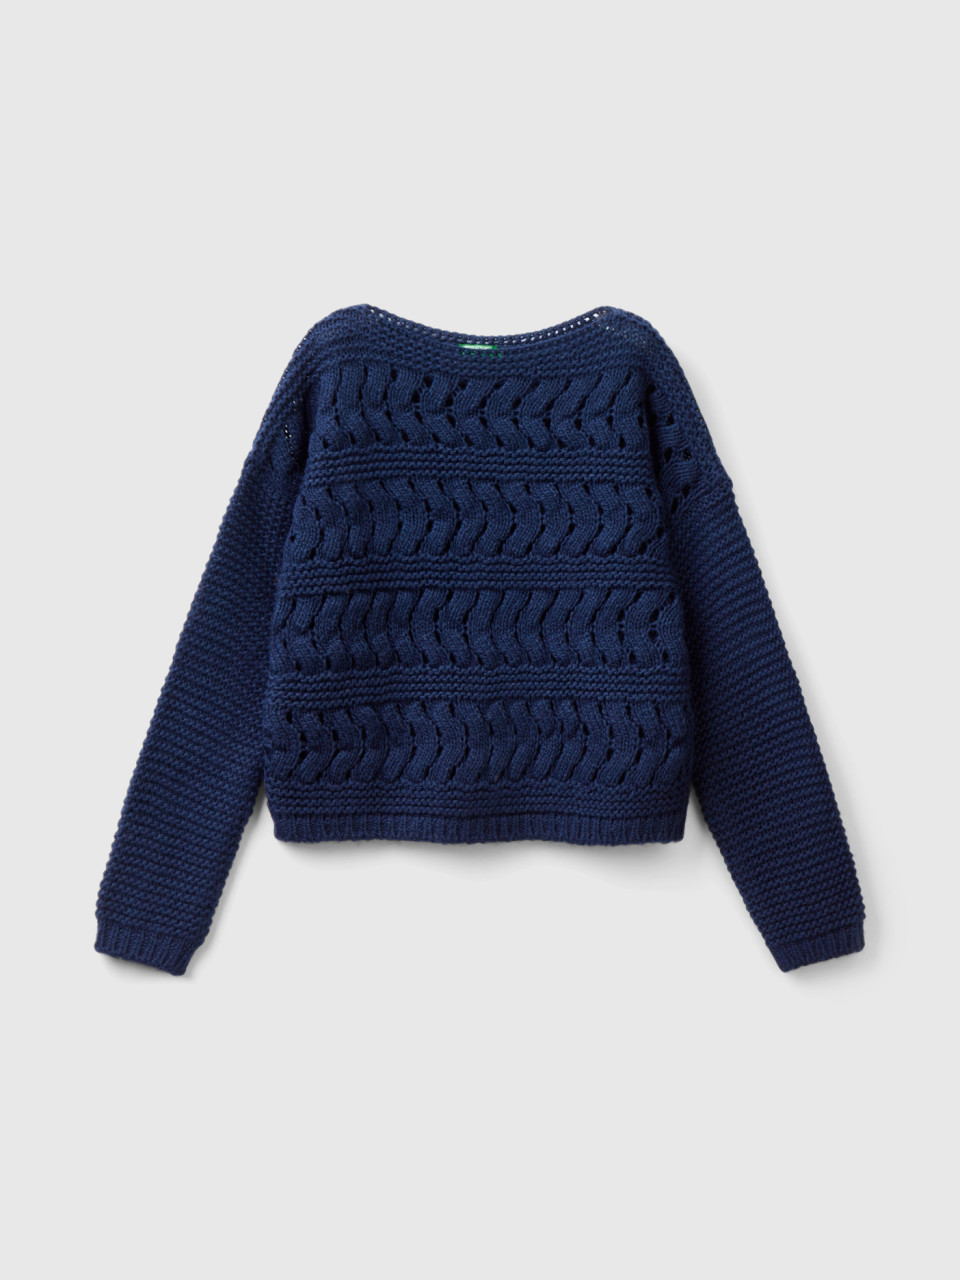 Benetton, Cable Knit Sweater In Wool Blend, Dark Blue, Kids